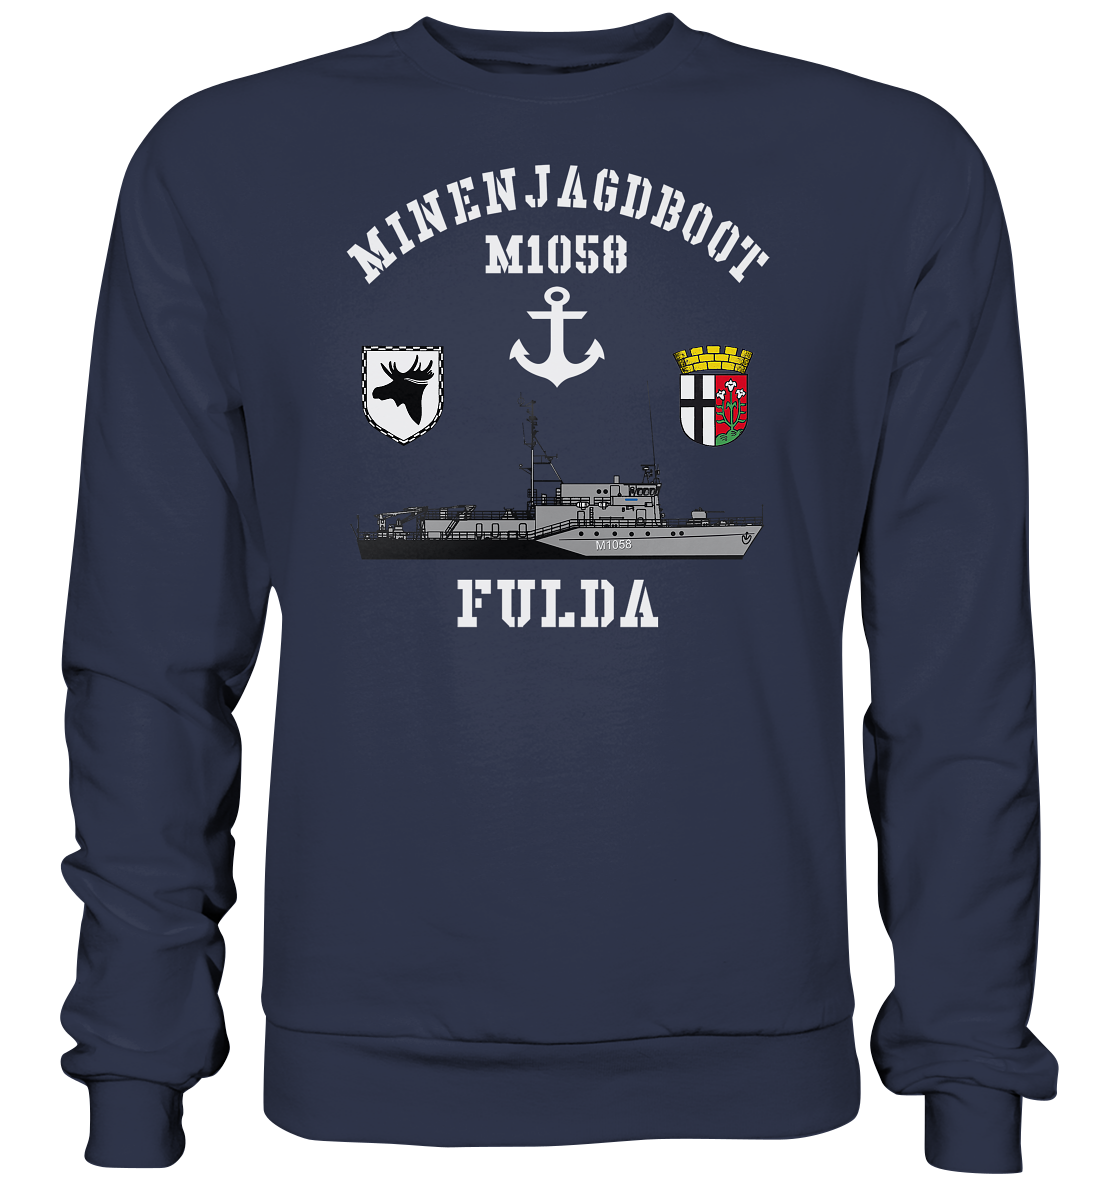 Mij.-Boot M1058 FULDA Anker 3.MSG - Premium Sweatshirt